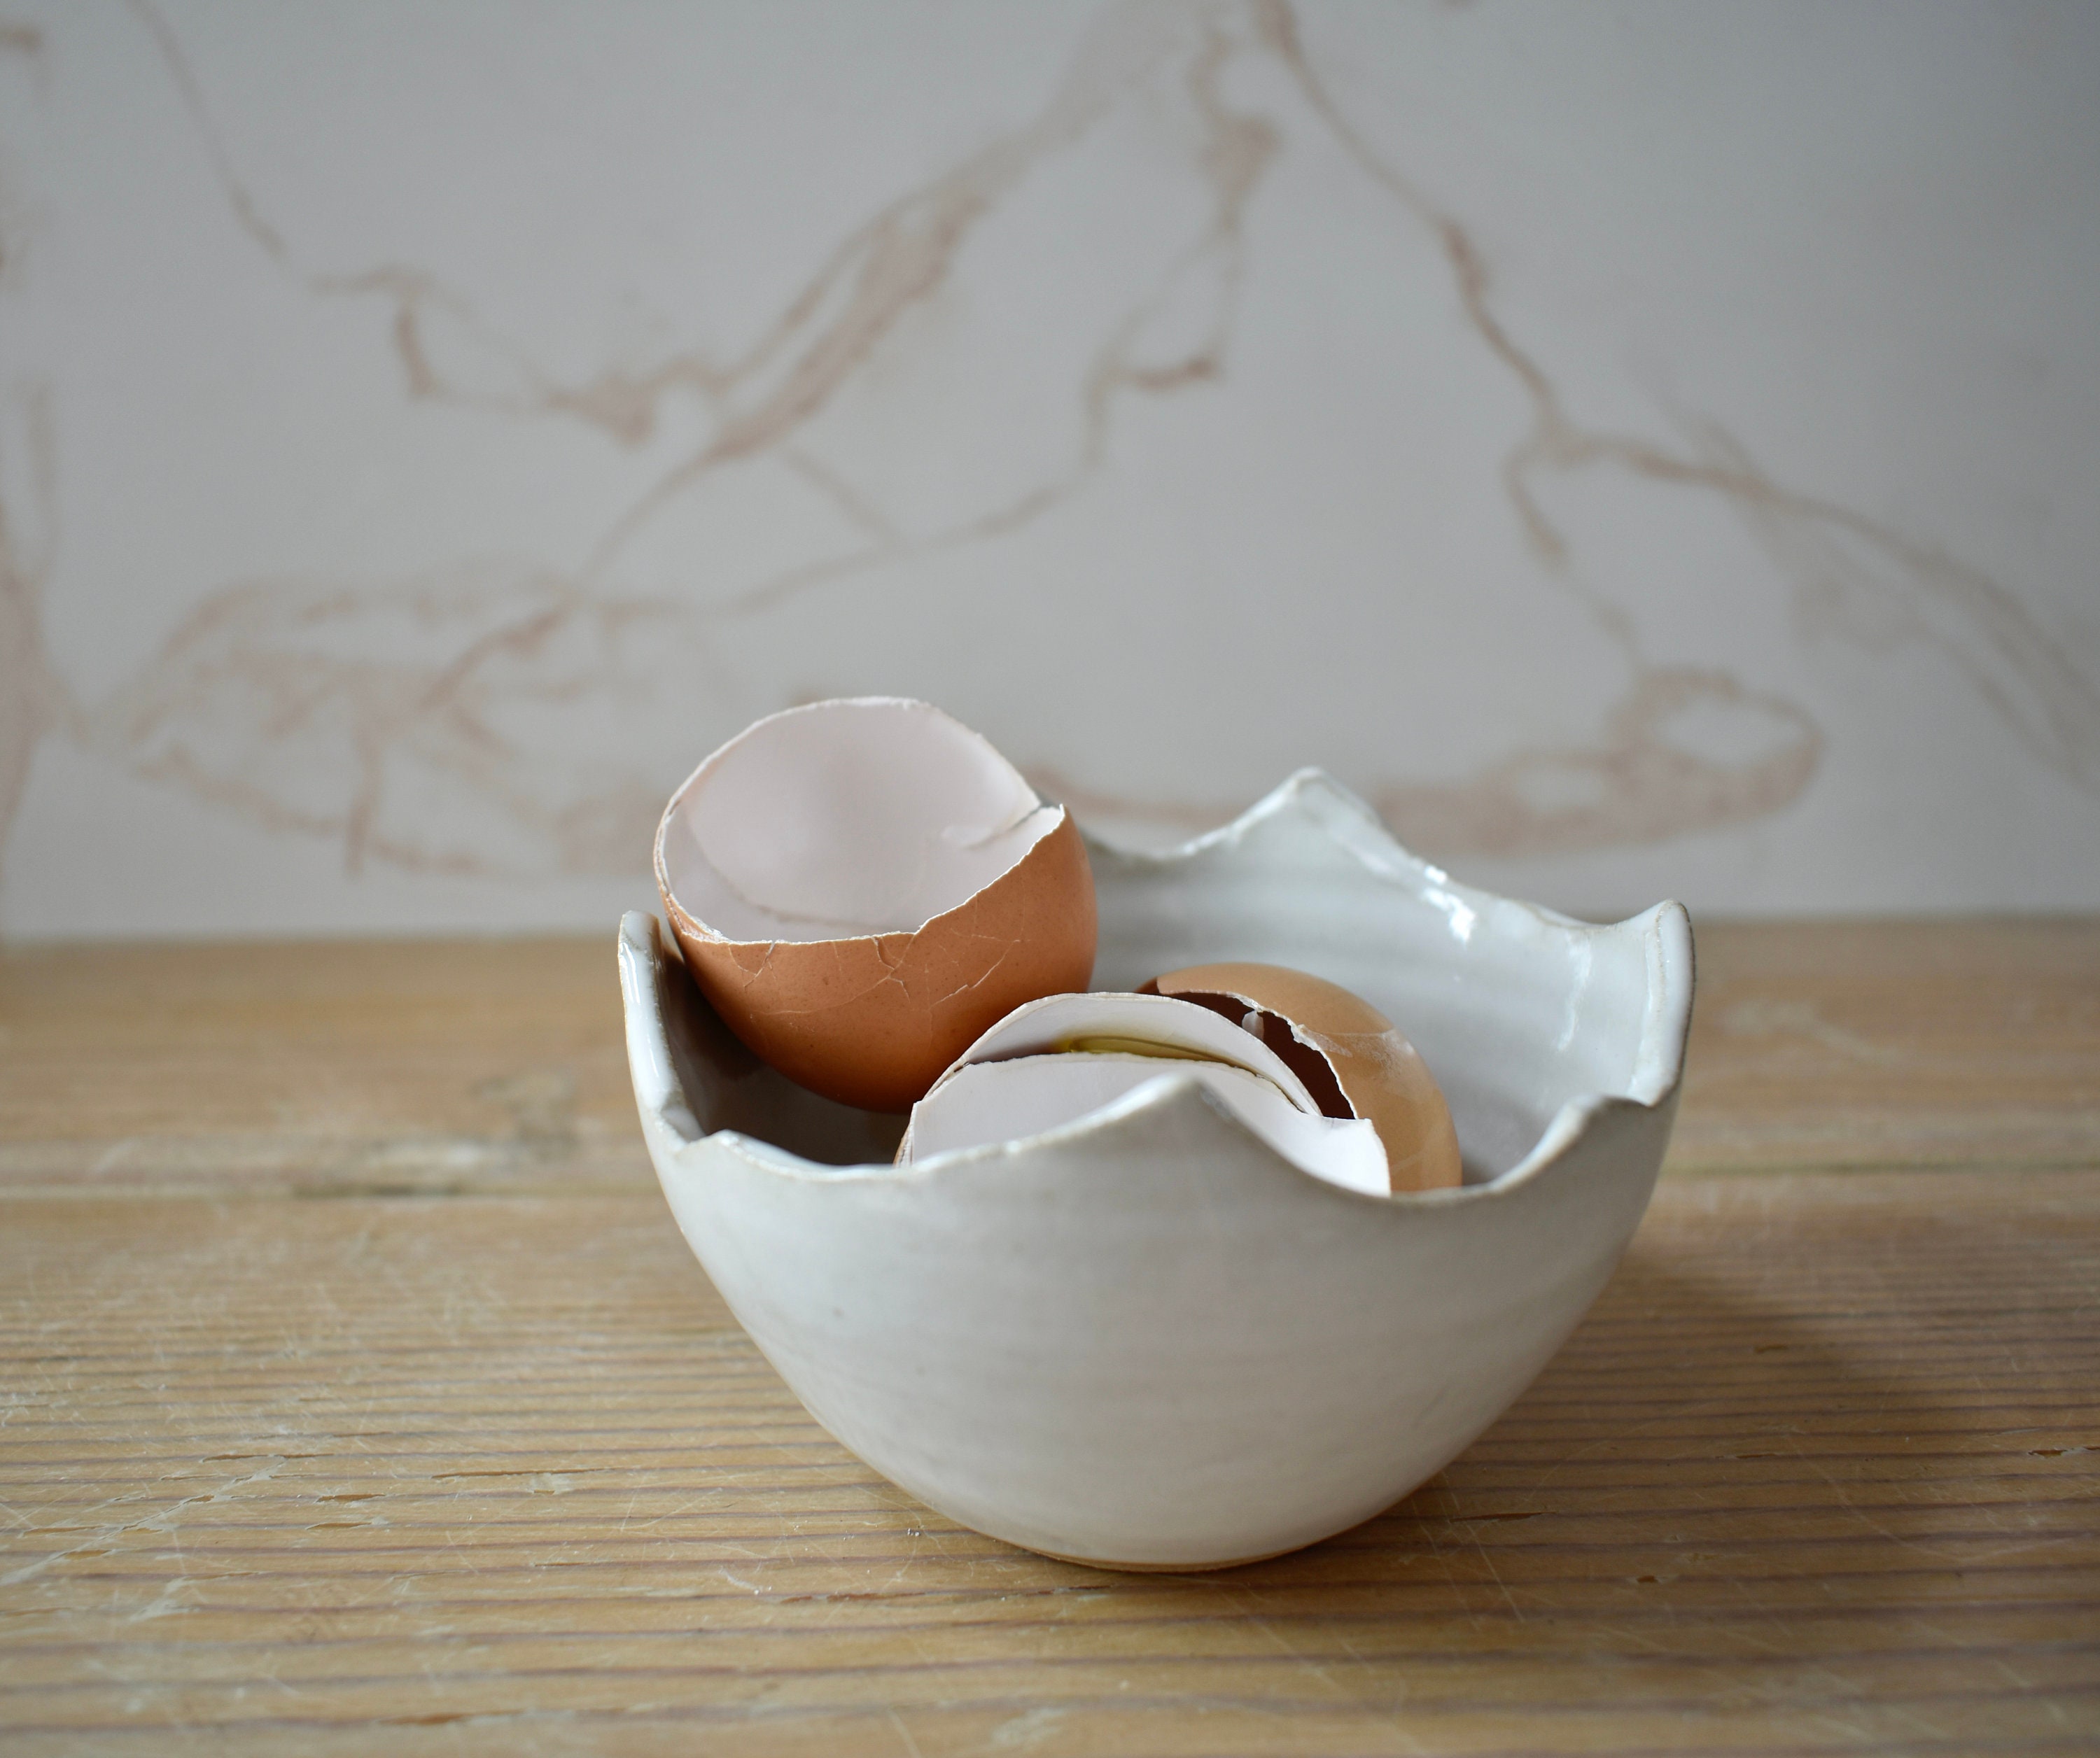 Colorful Ceramic Chicken Egg Holder